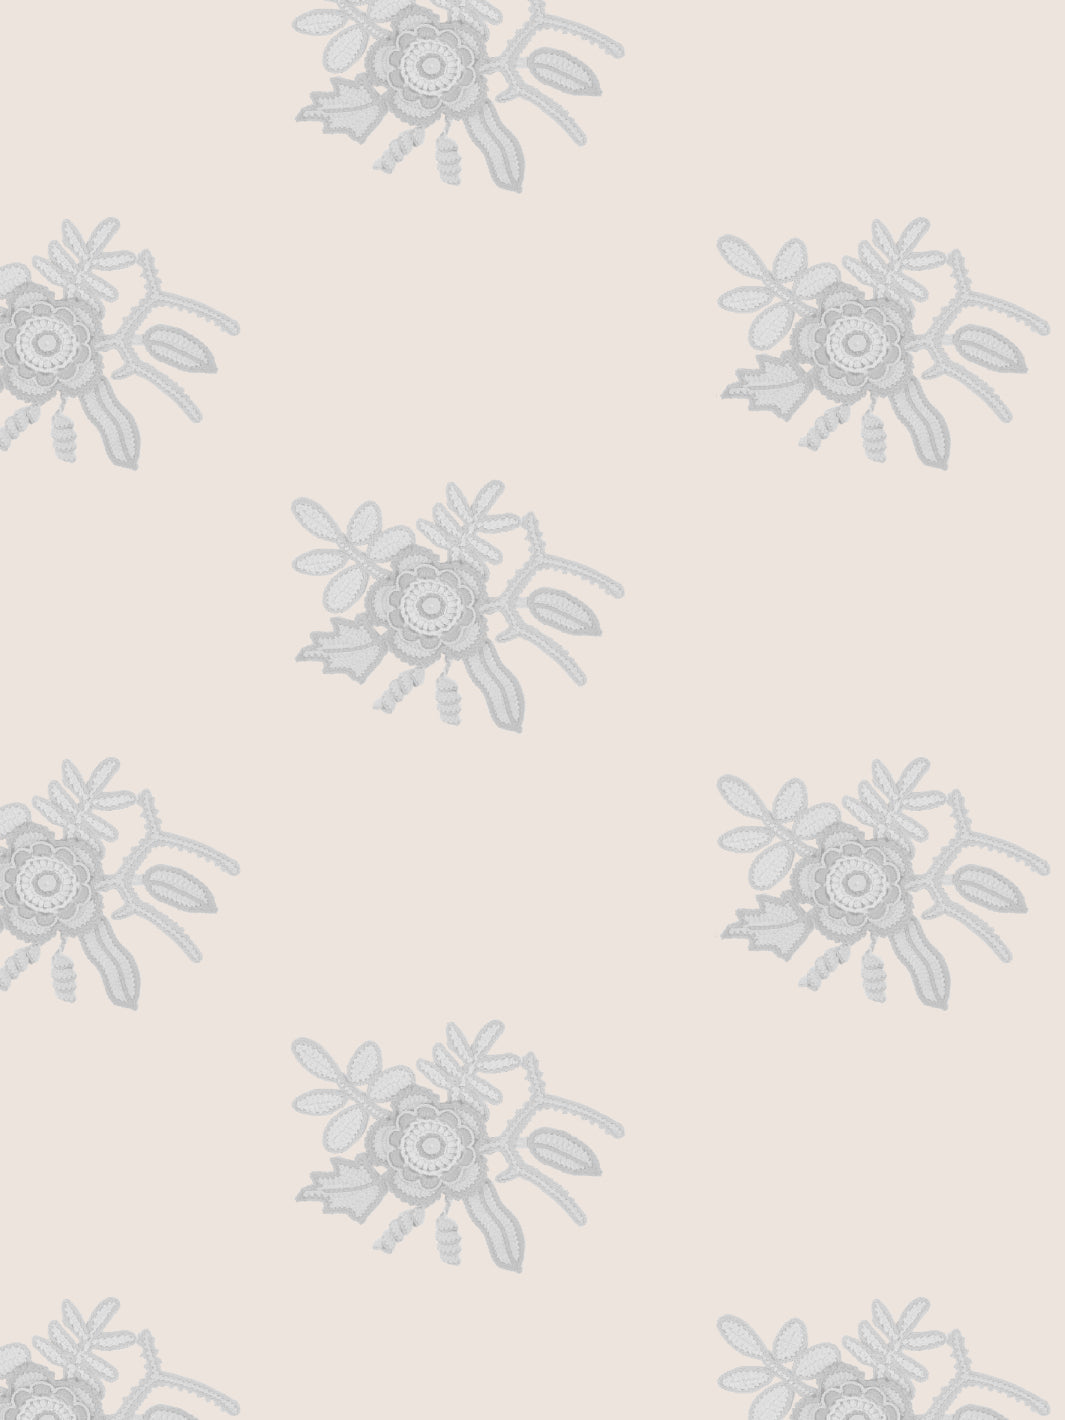 'Crochet Lace Flowers' Wallpaper by Lingua Franca - Cream